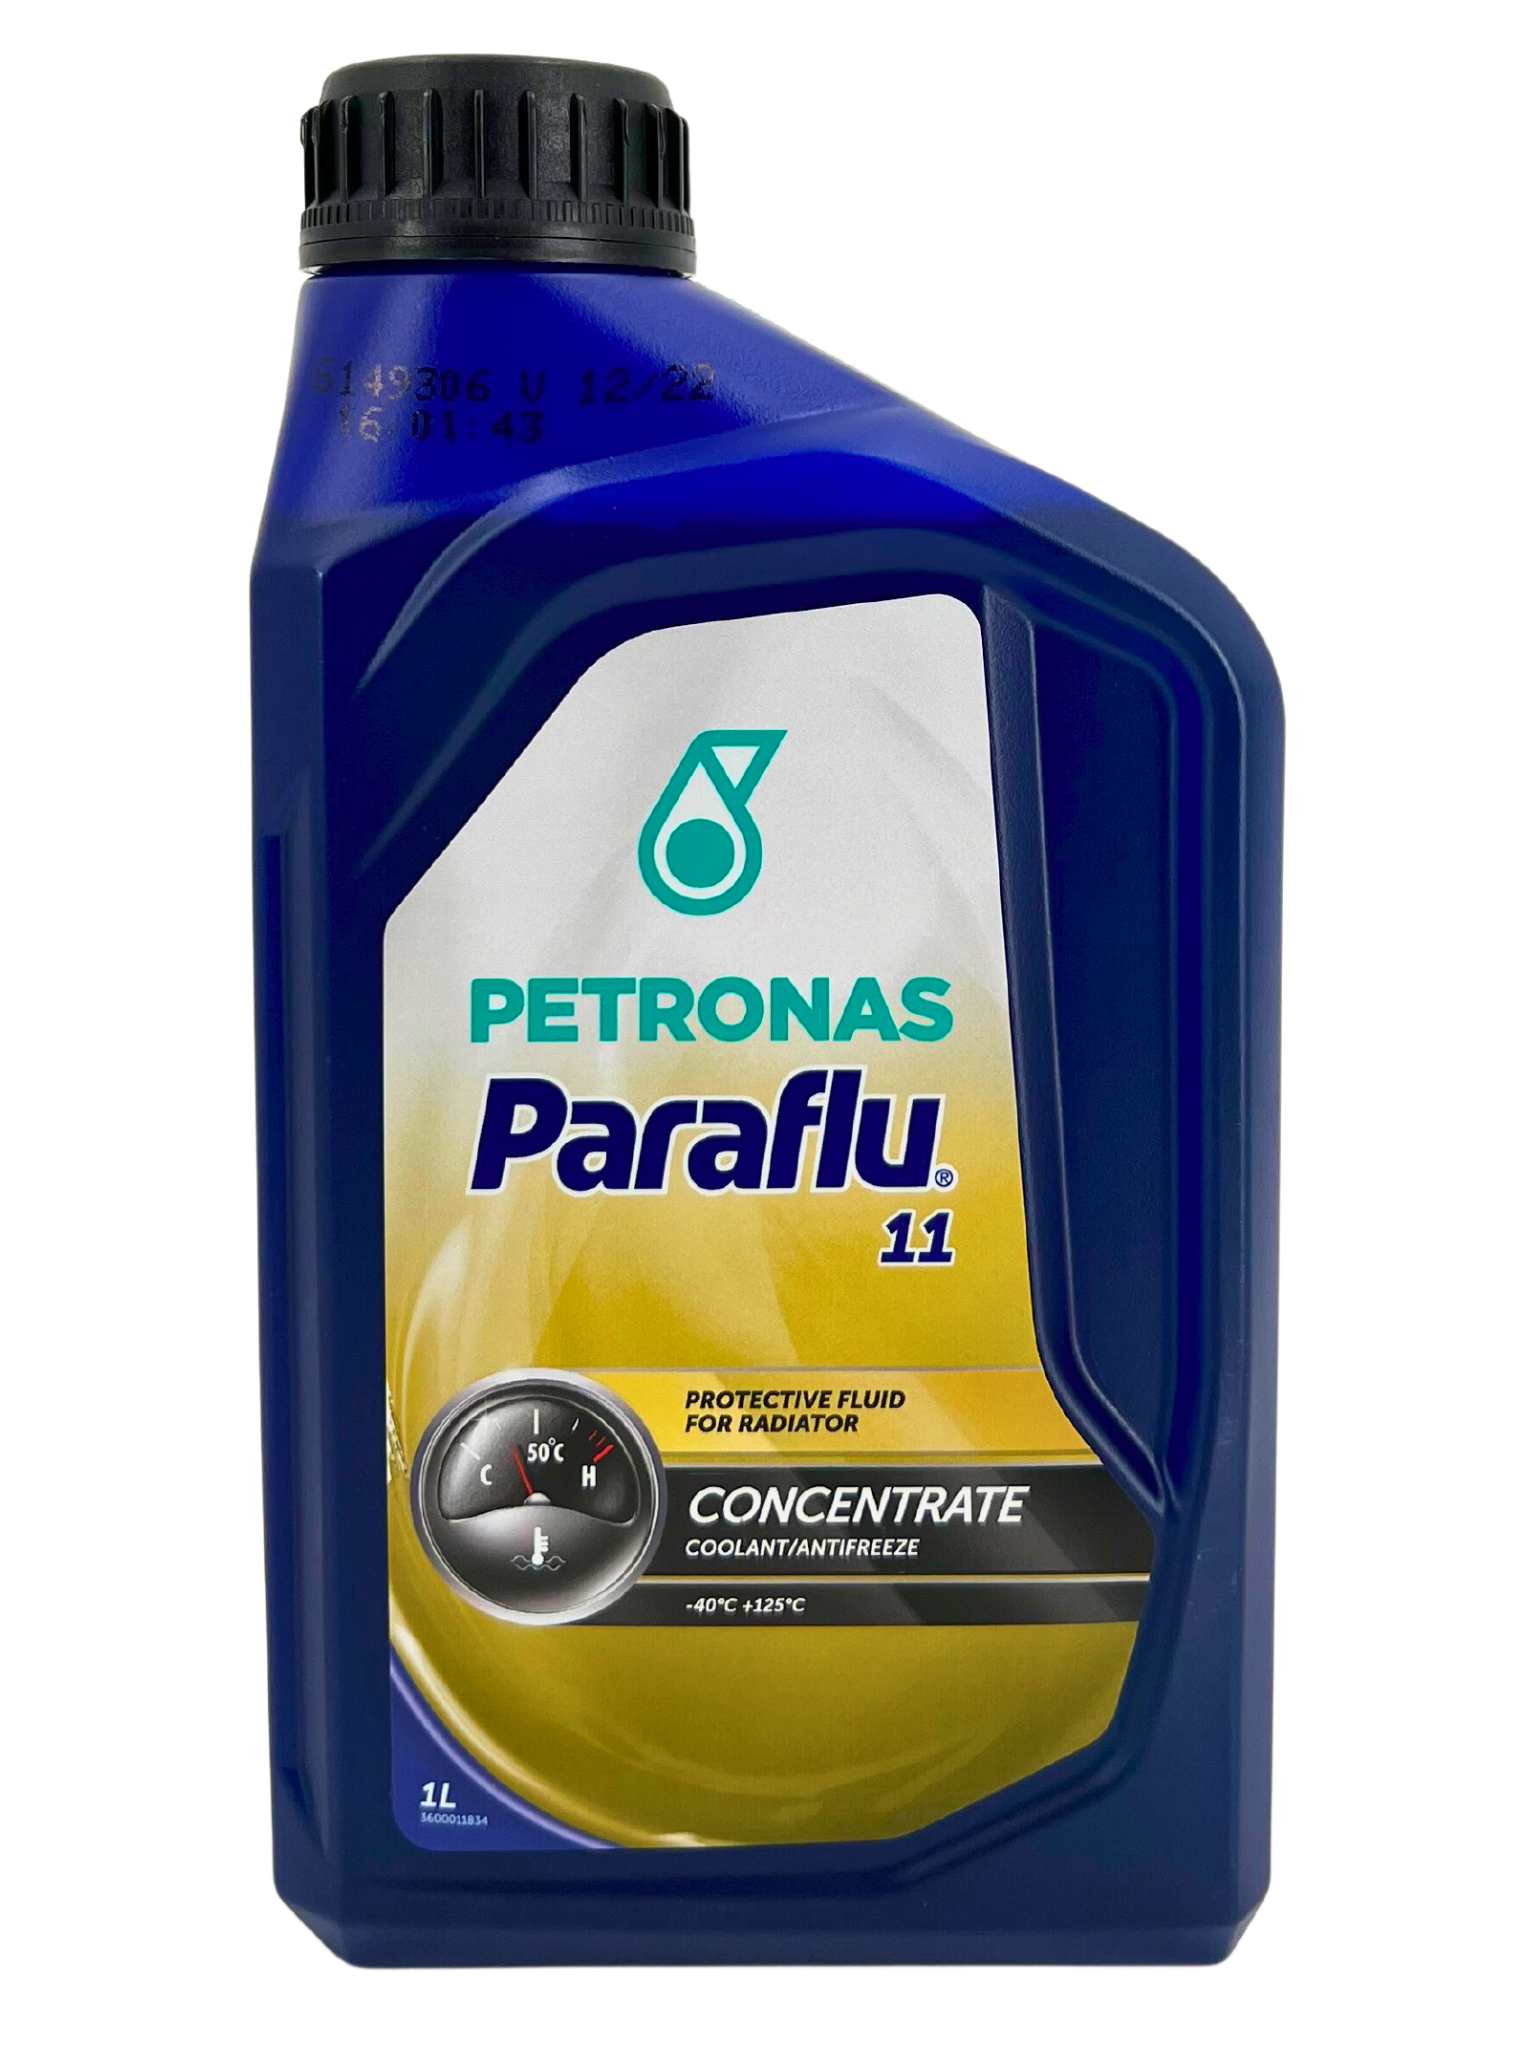 Petronas Paraflu Kühlerfrostschutz 11 blau 1 Liter